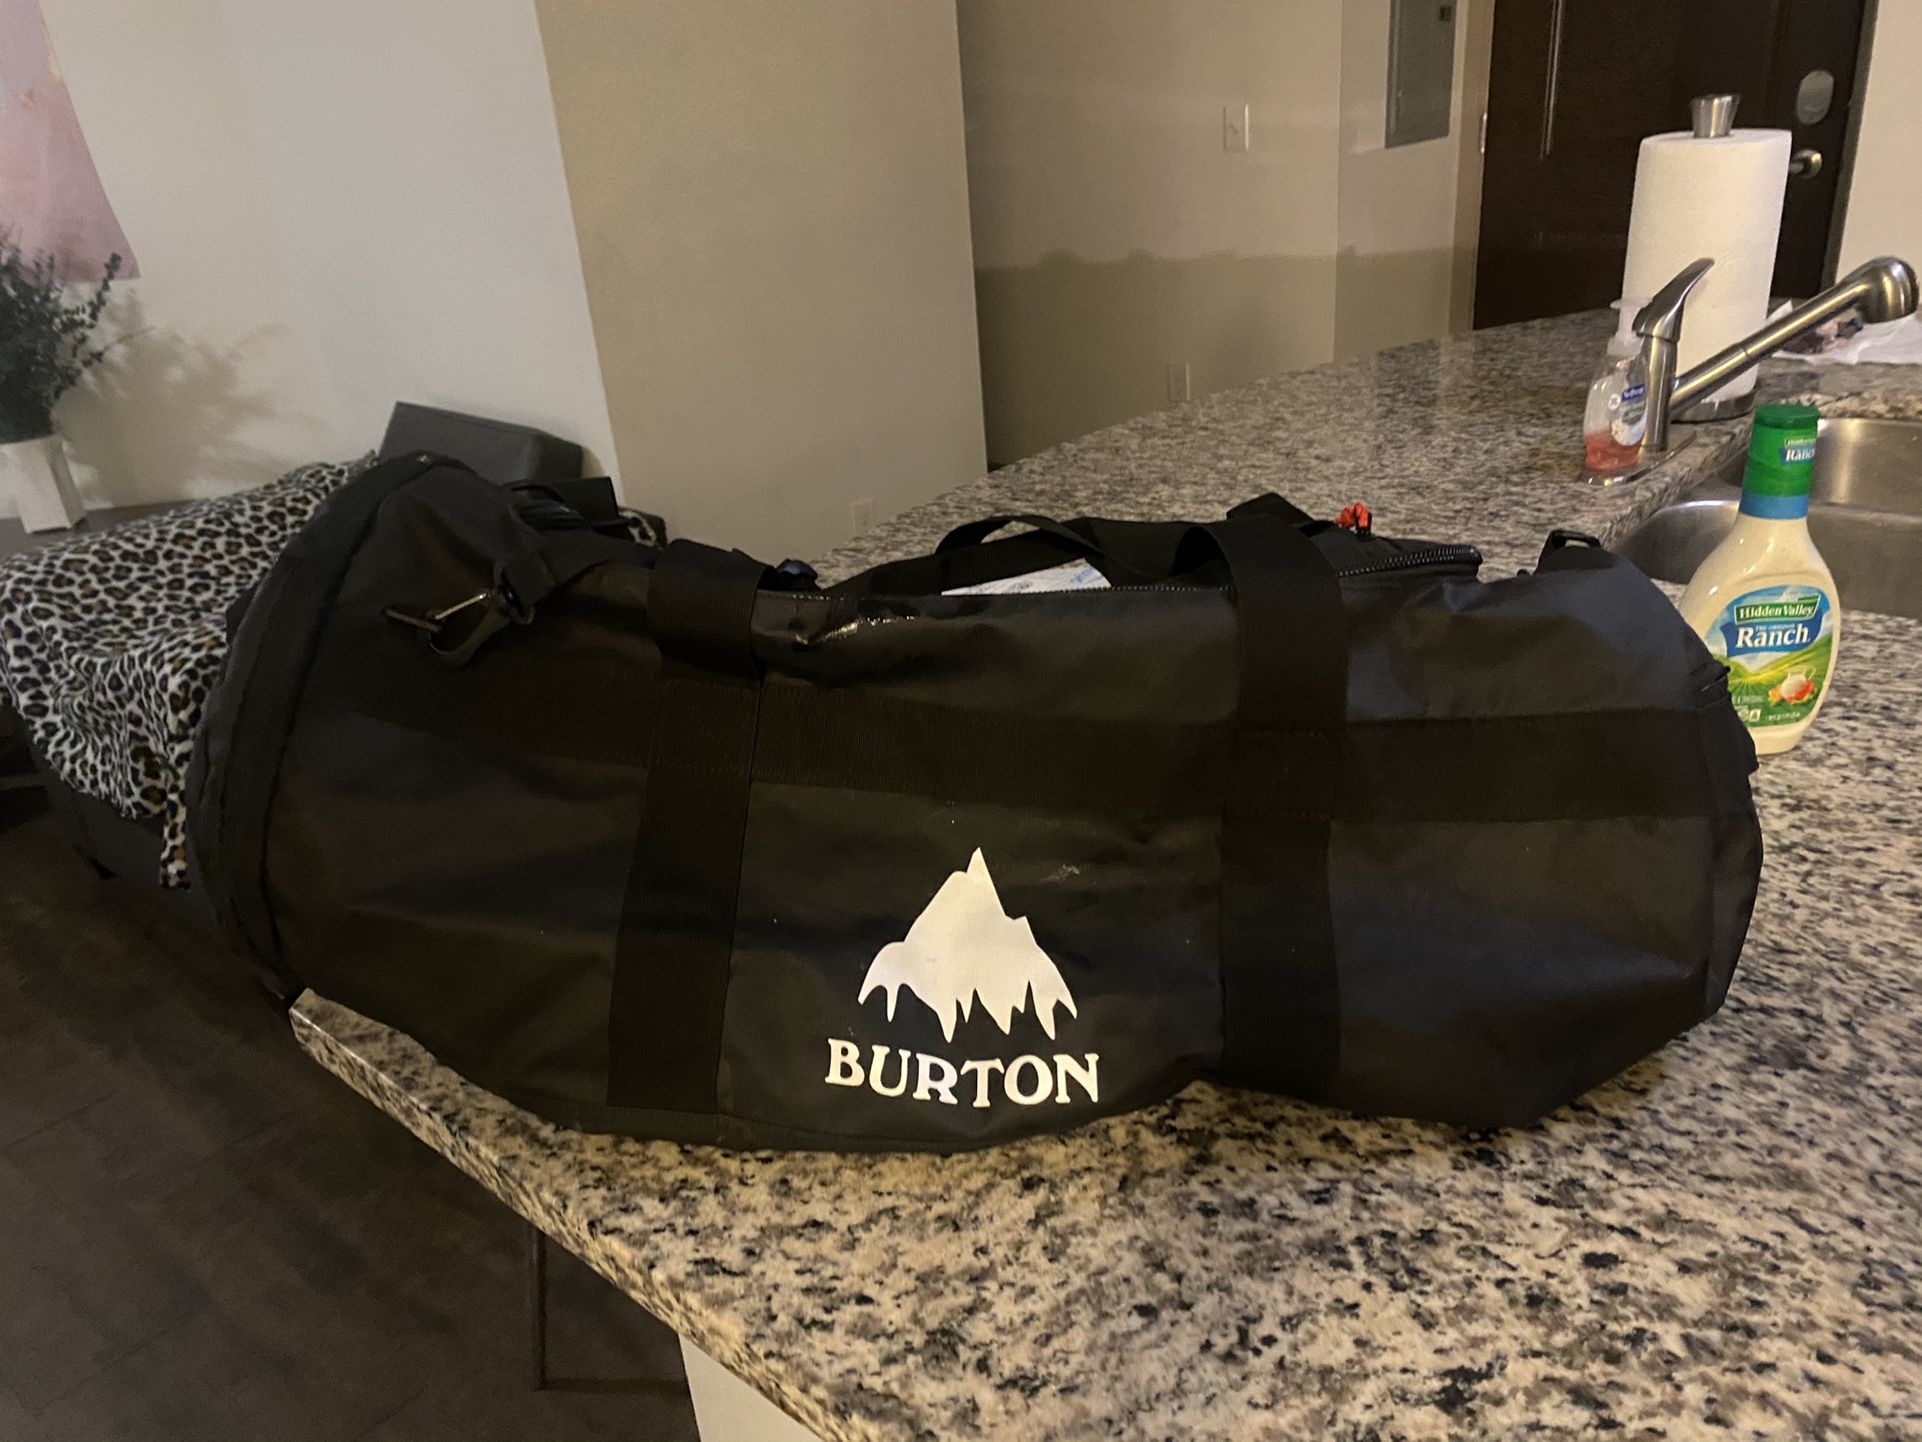 Burtom snowboard bag